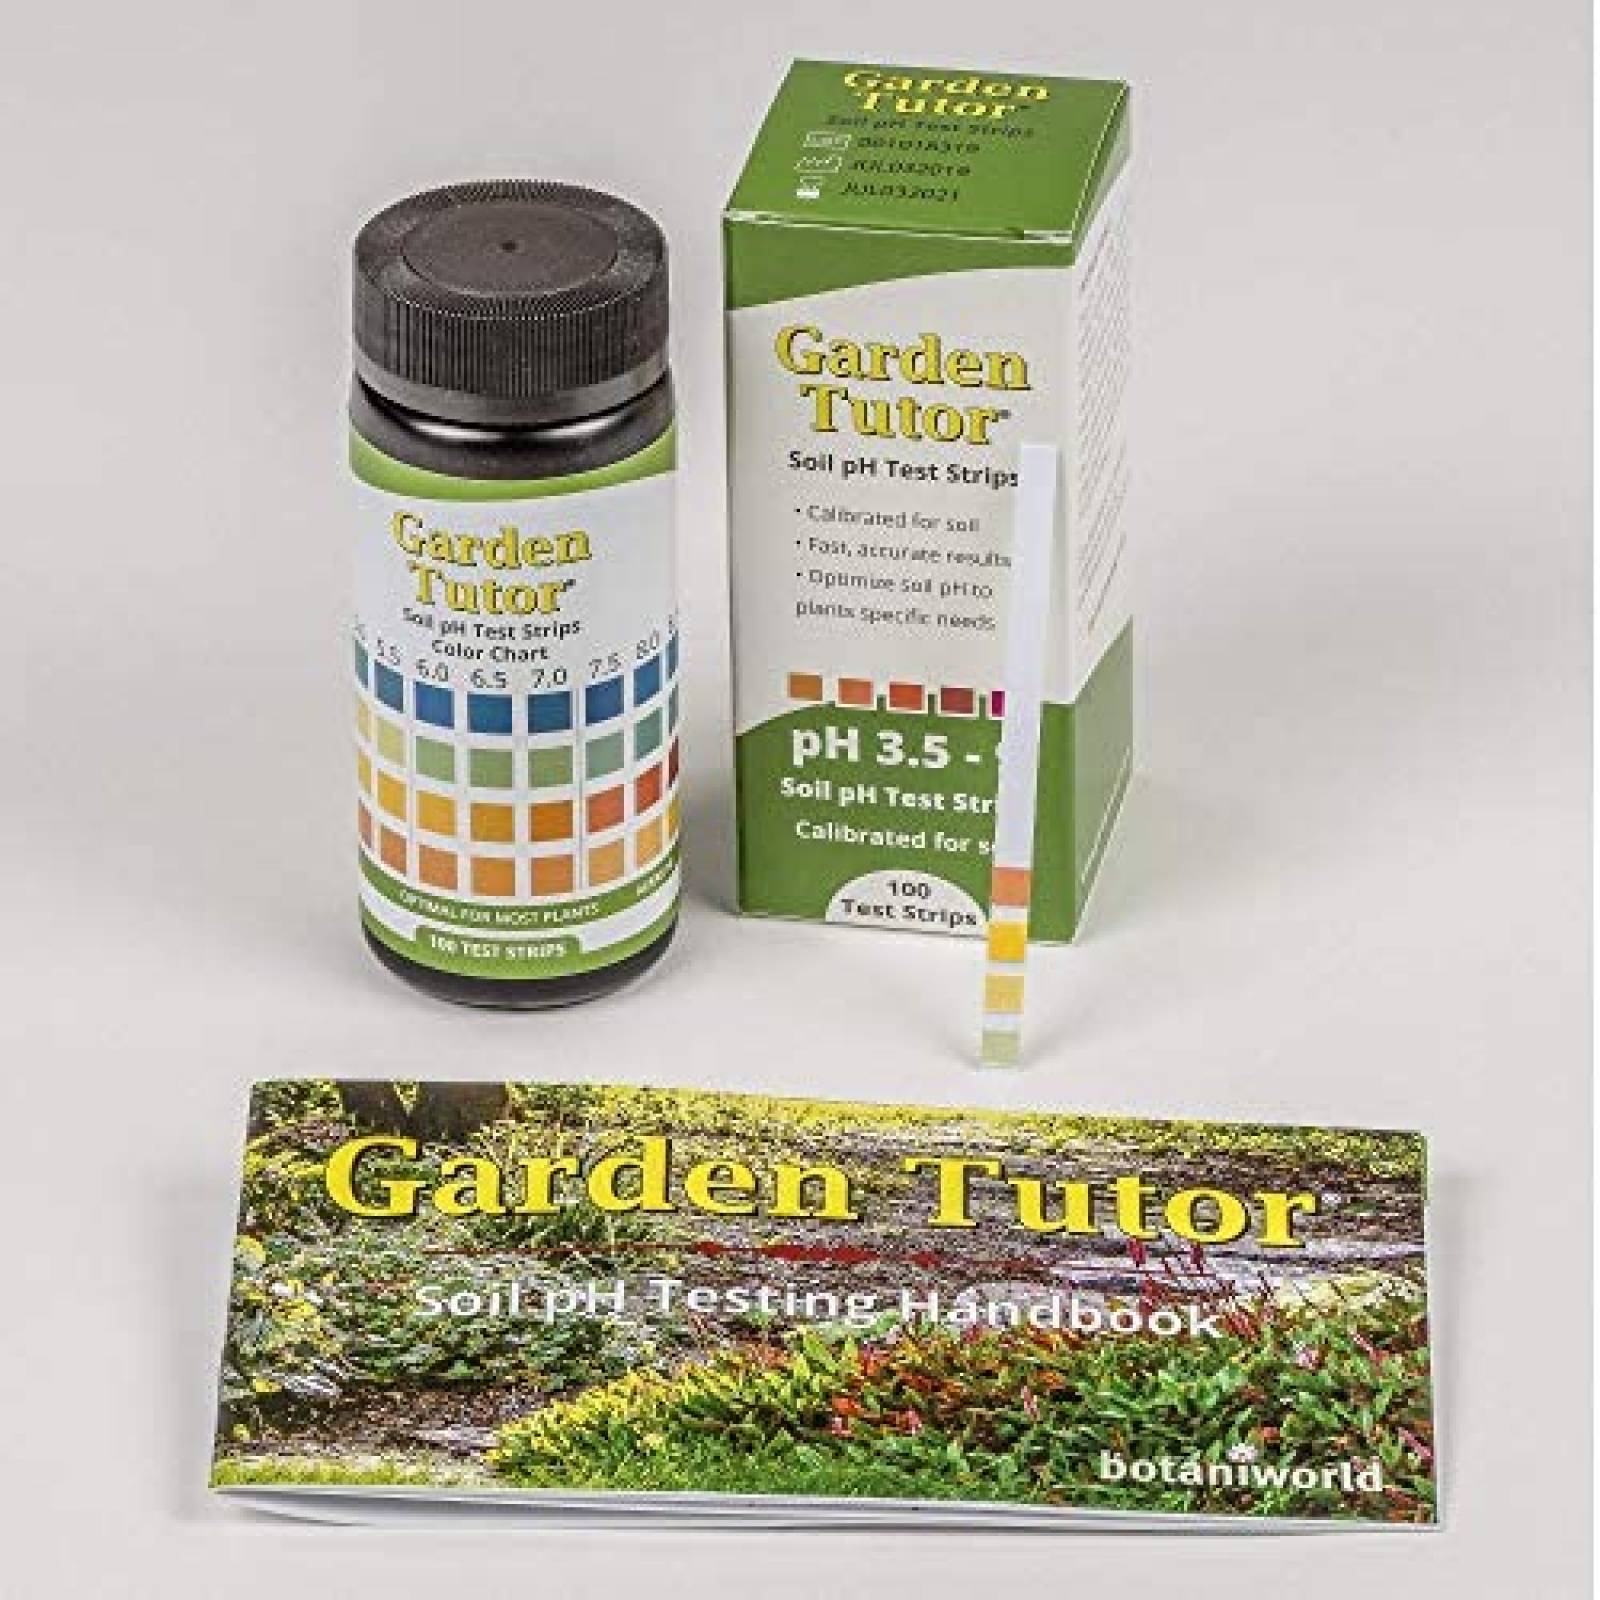 Kit de Prueba de PH Garden Tutor 100 Tests para Jardín